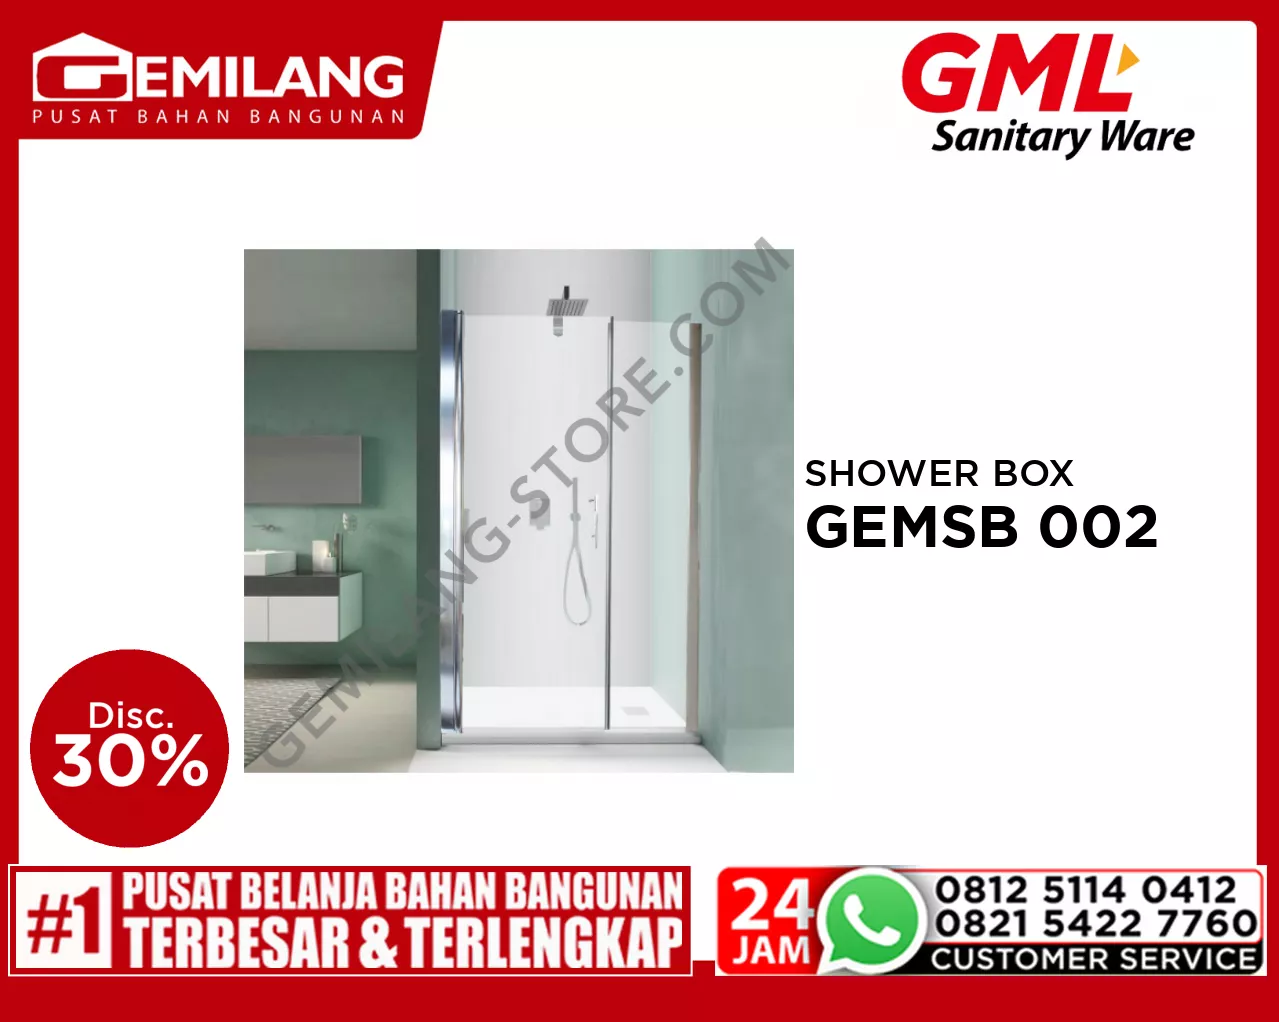 GML SHOWER BOX GEMSB 002